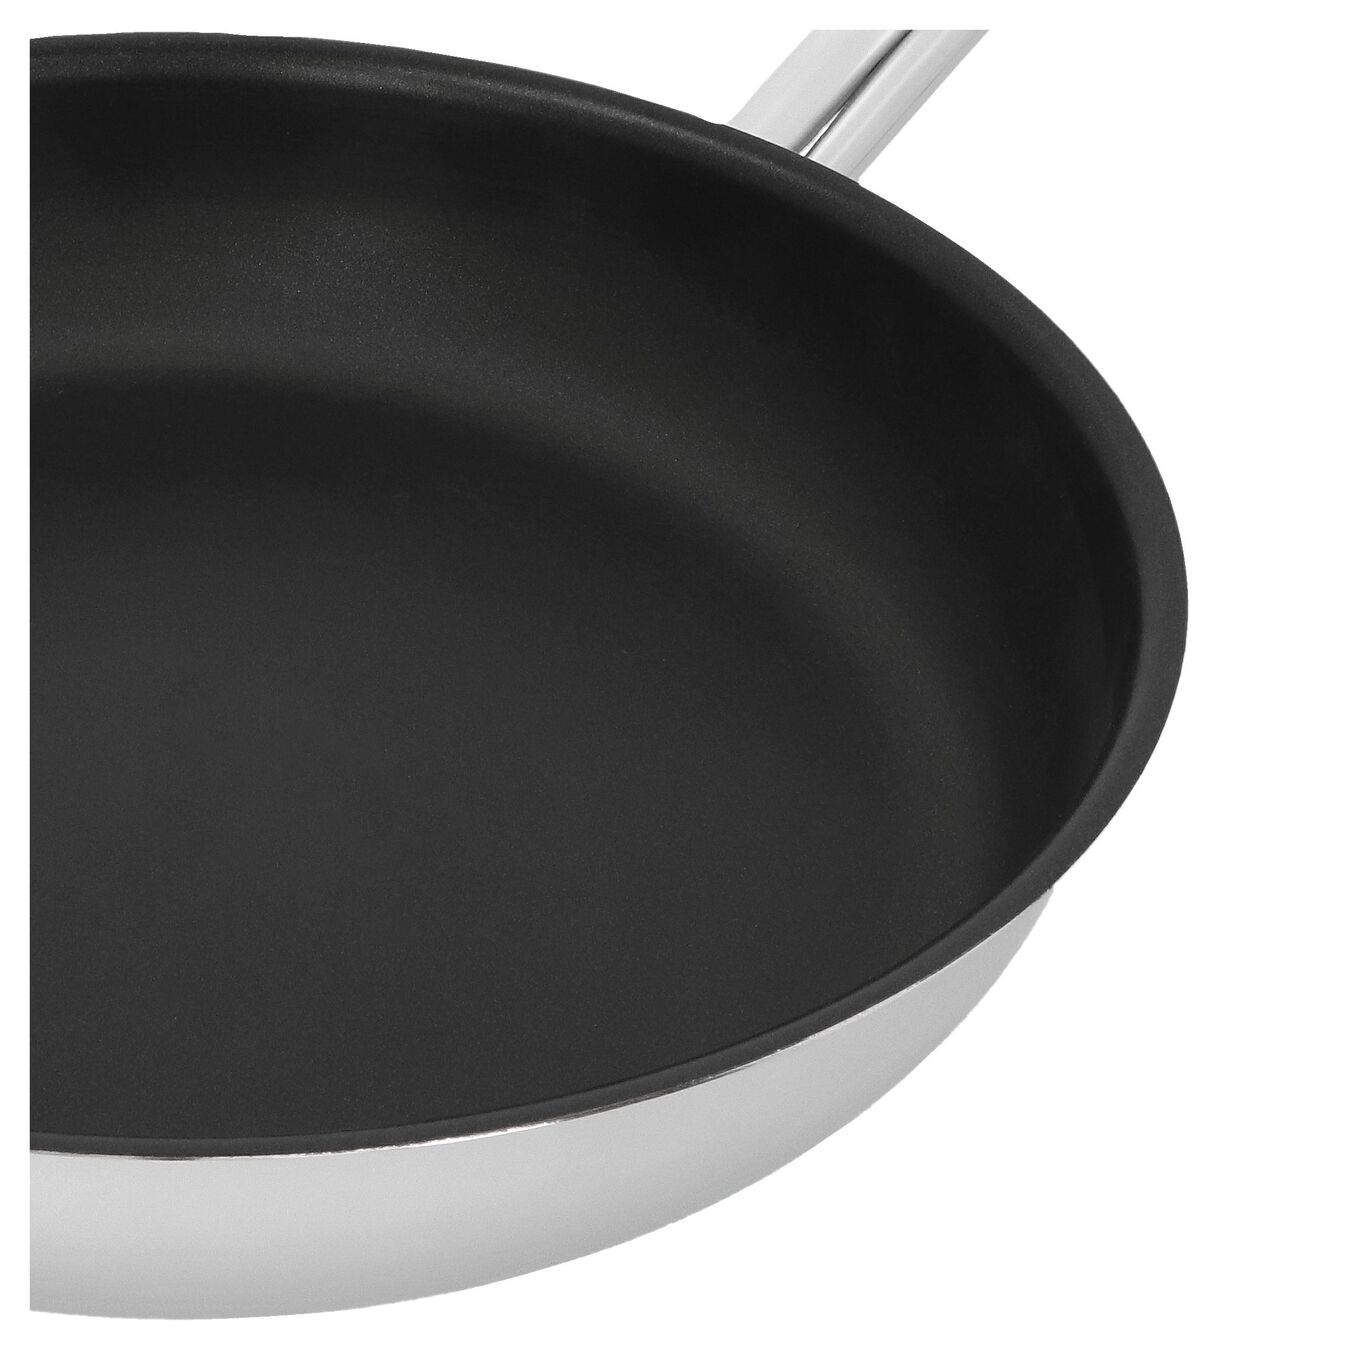 32 cm 18/10 Stainless Steel Frying pan silver-black,,large 2